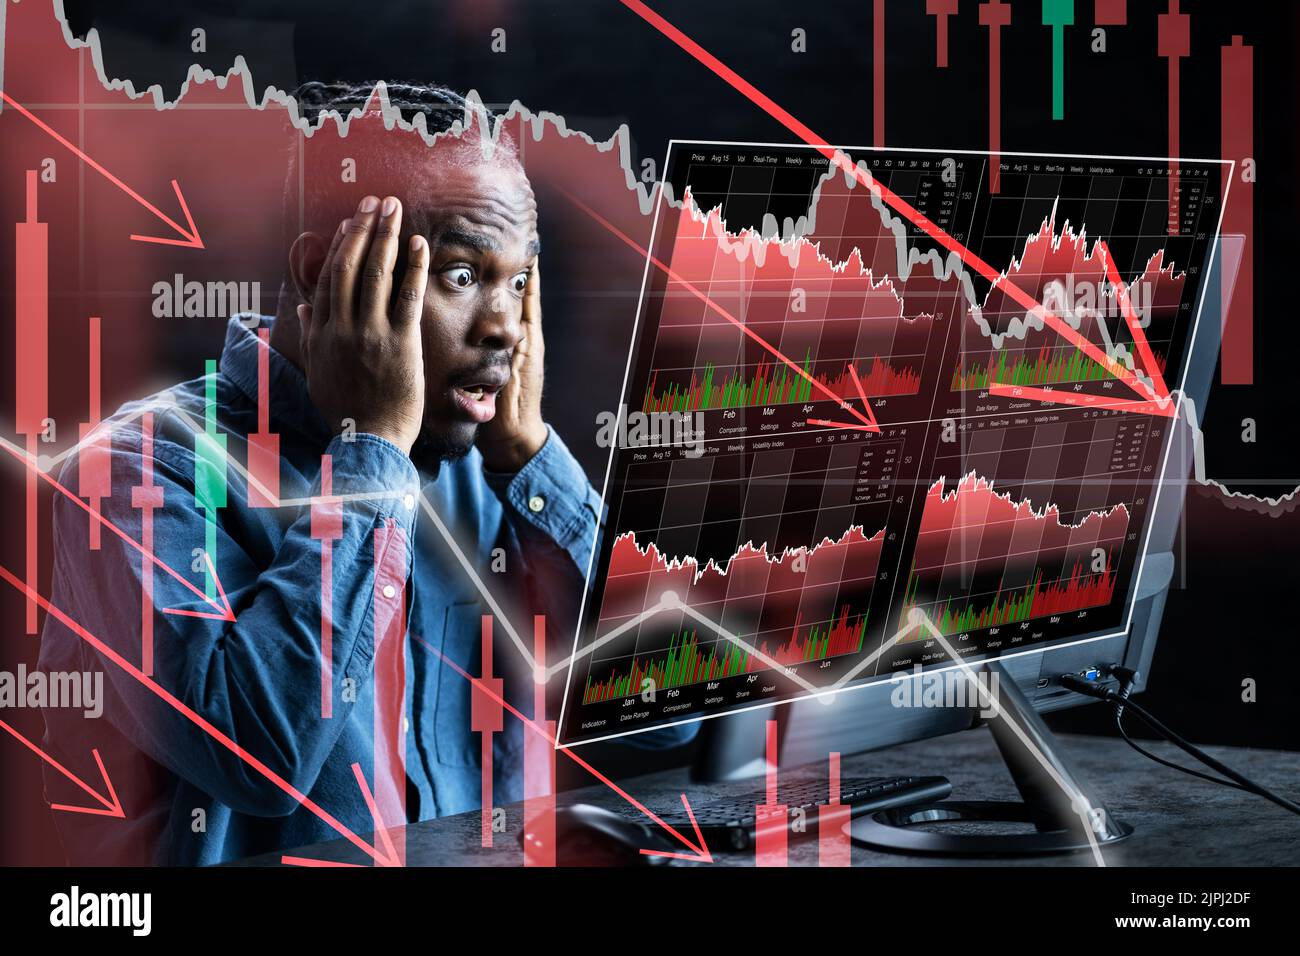 Stock Trade Loss And Insolvency. Plummeting Market Crisis Stock Photo